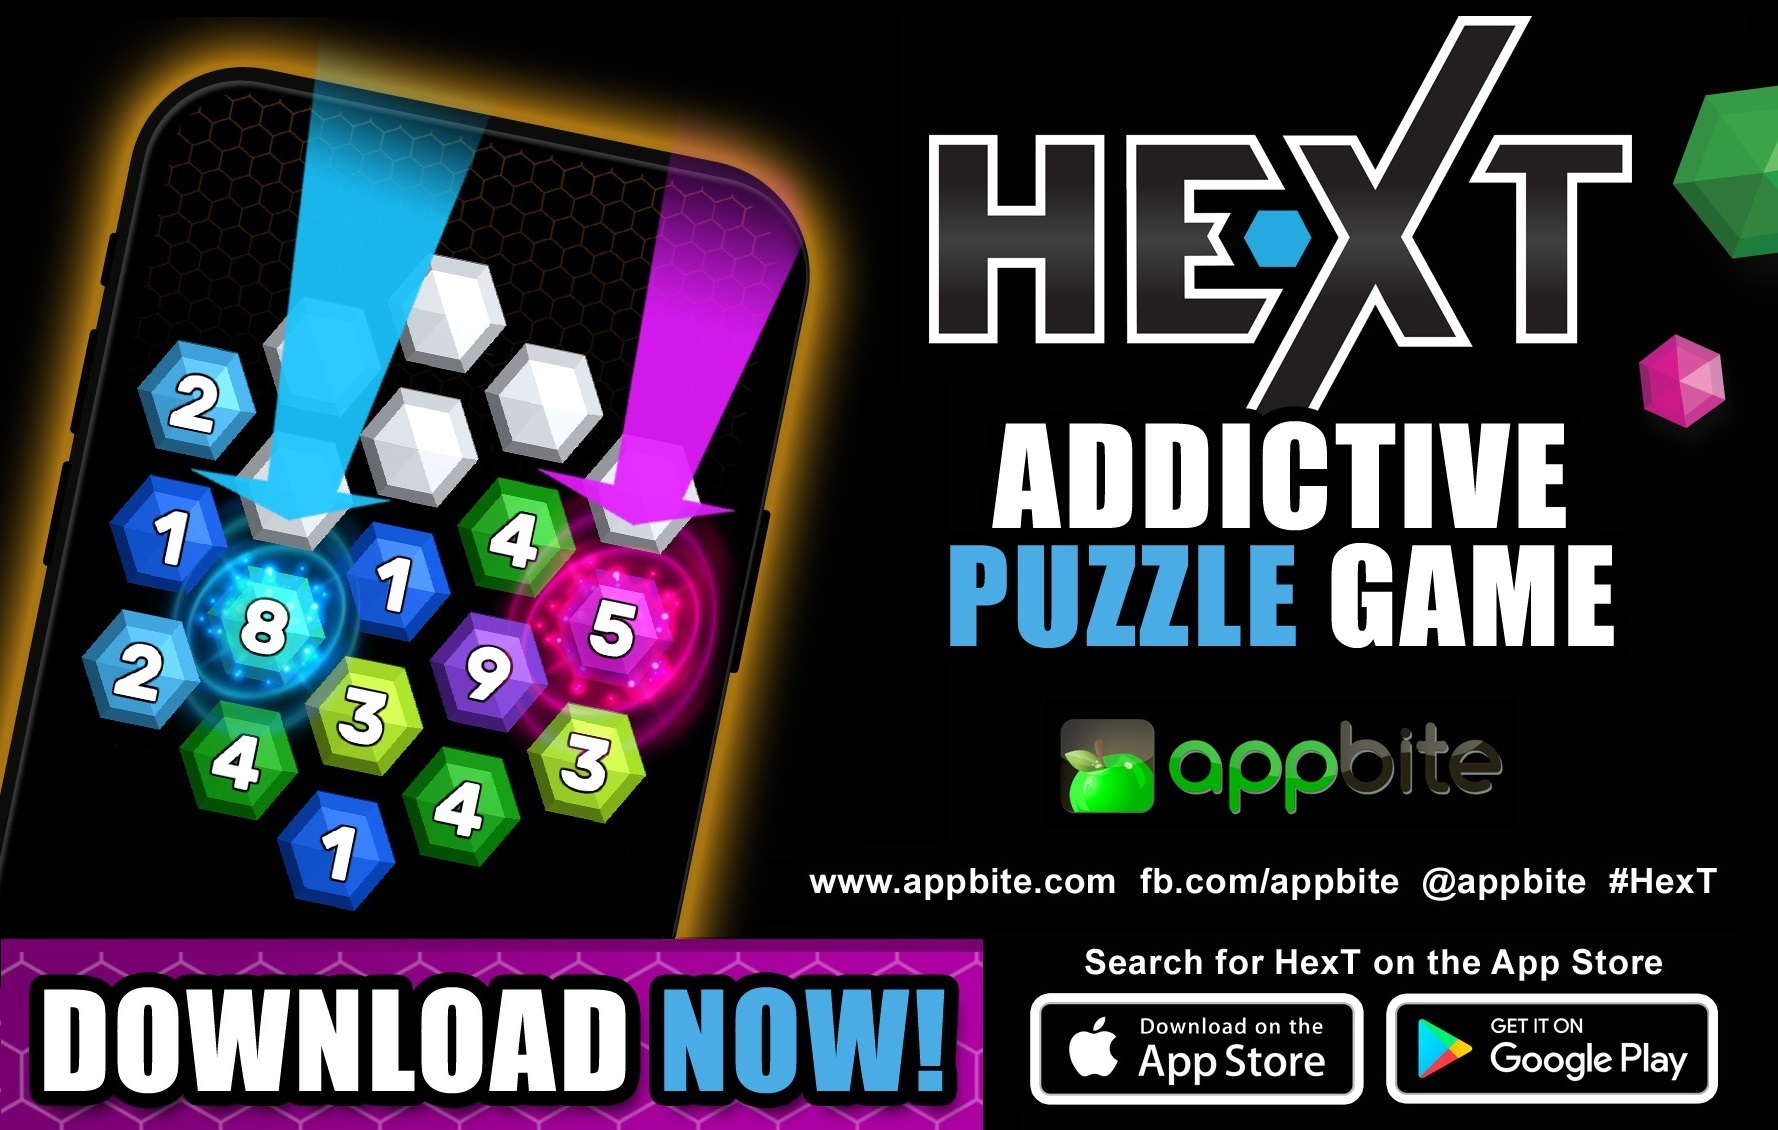 HexT Promotional Photo Banner